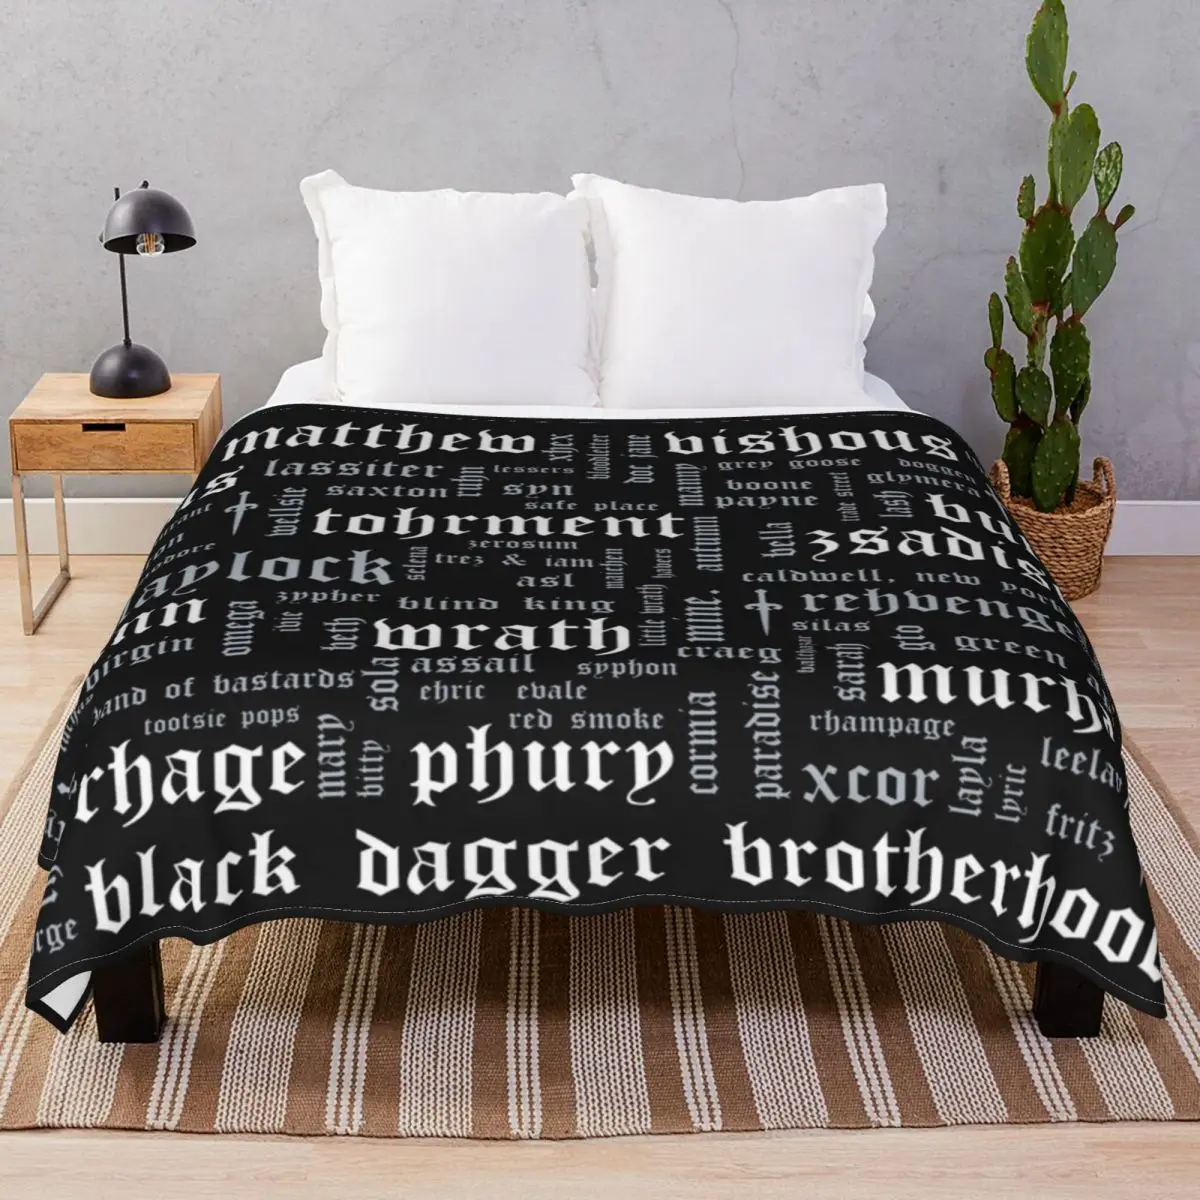 Black Dagger Brotherhood Word Blanket Coral Fleece Printed Super Warm Throw Blankets for Bedding Home Couch Travel Cinema